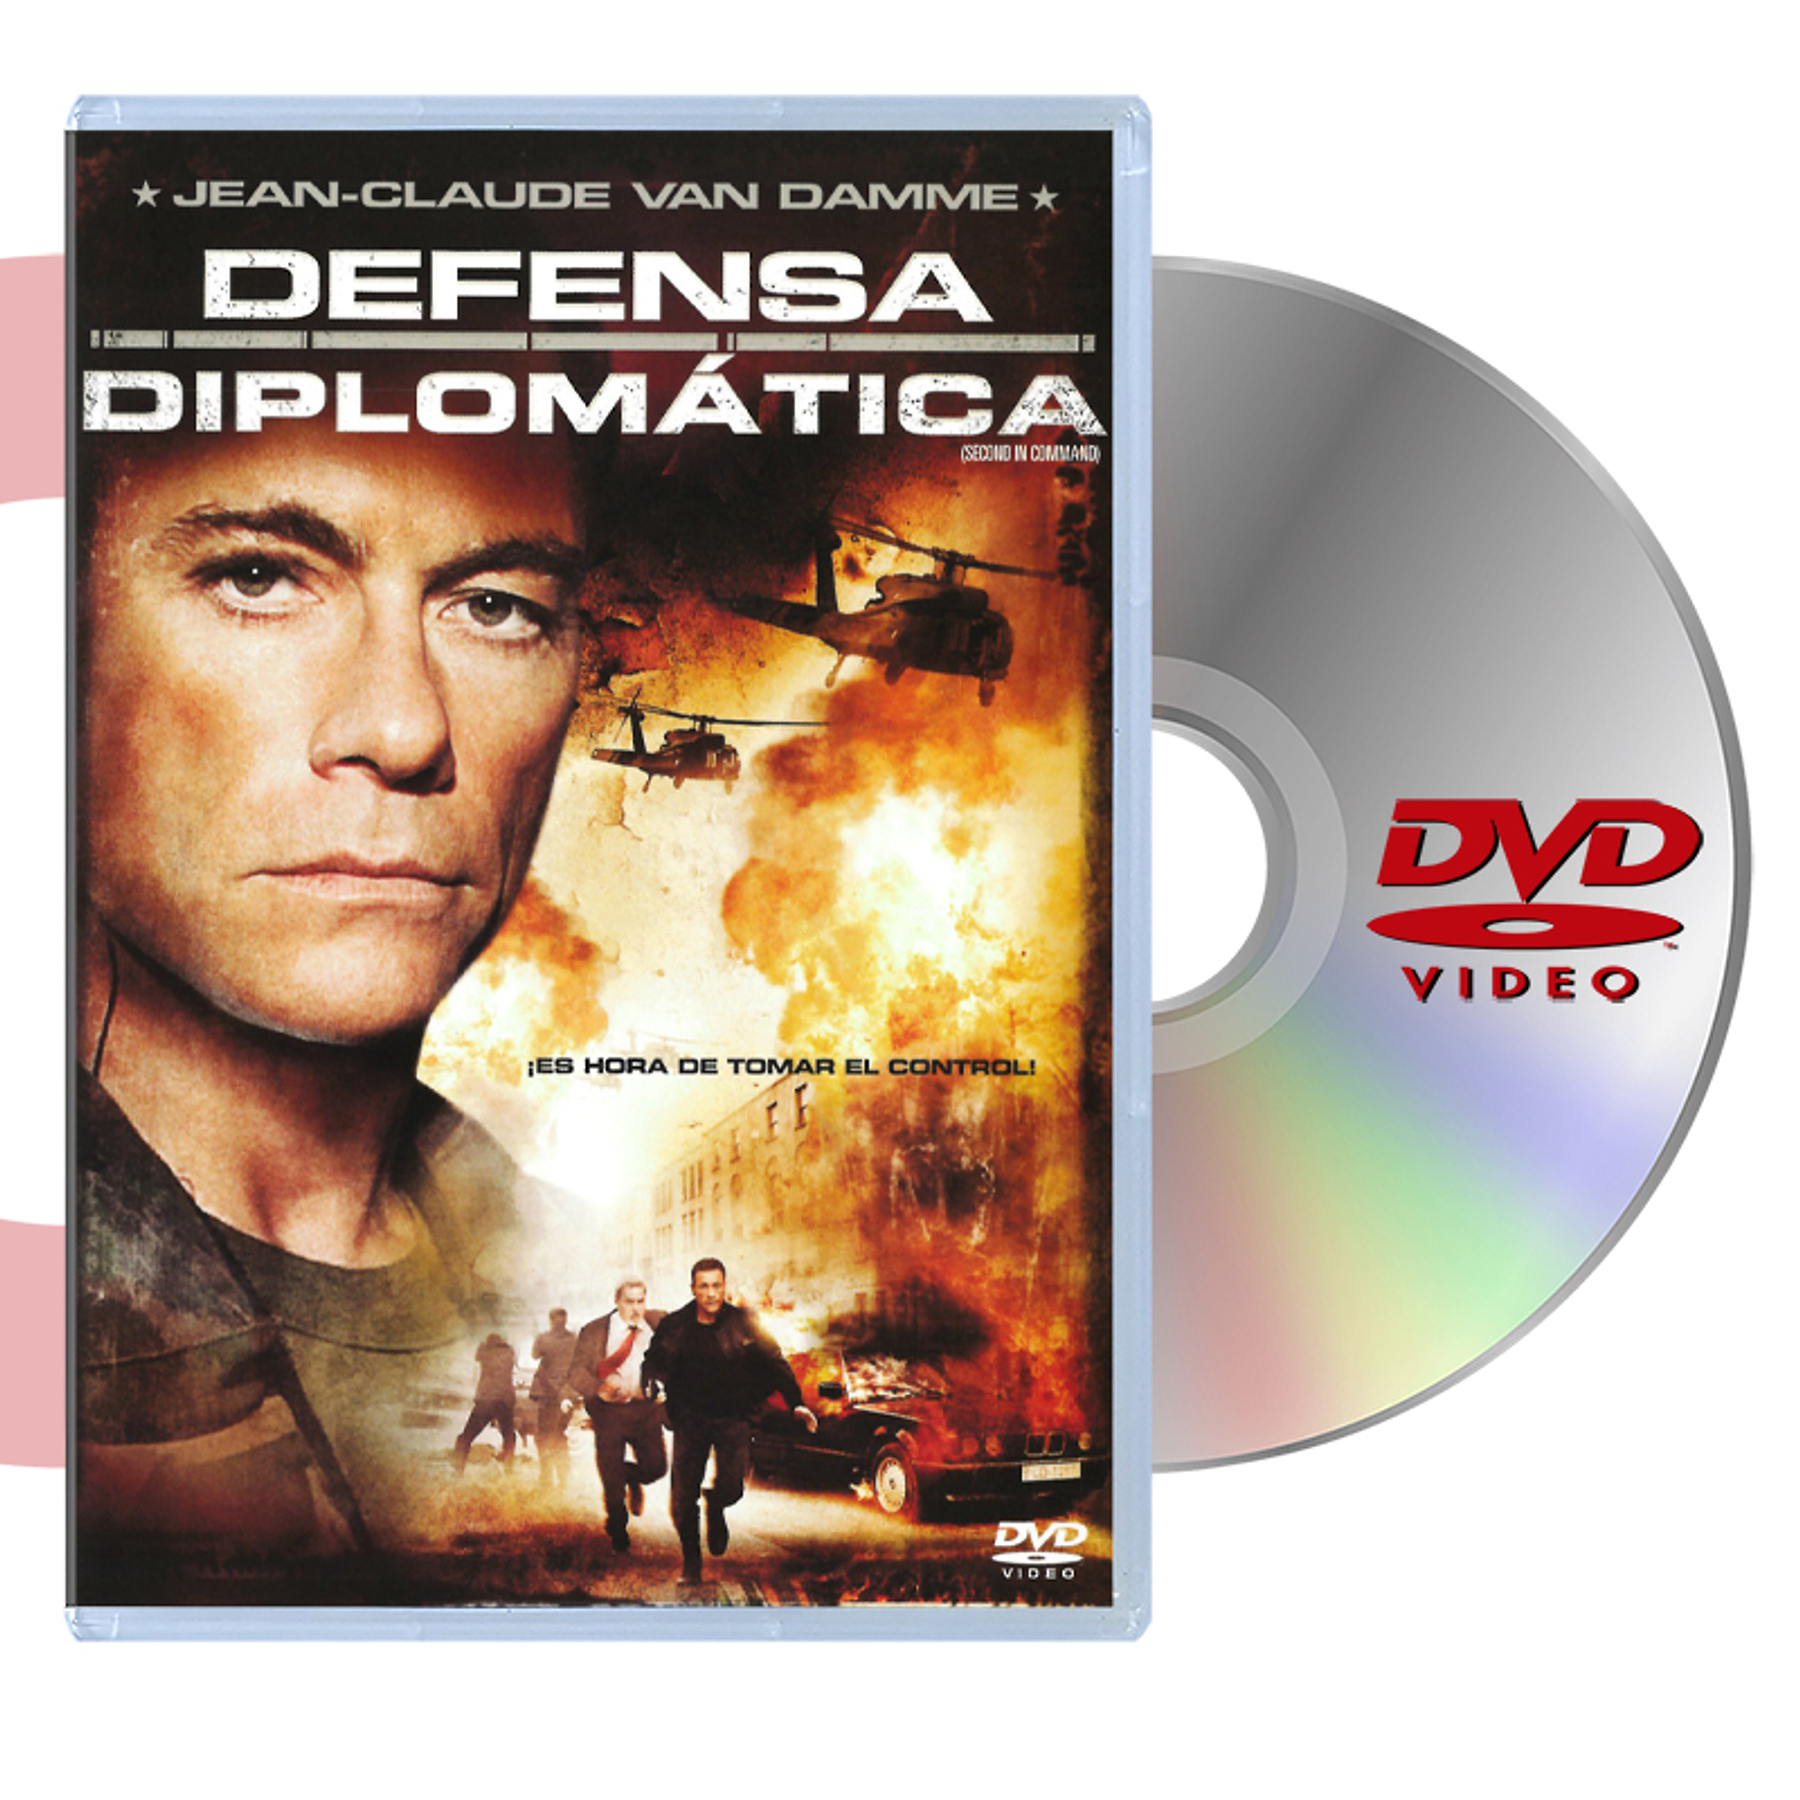 DVD DEFENSA DIPLOMATICA